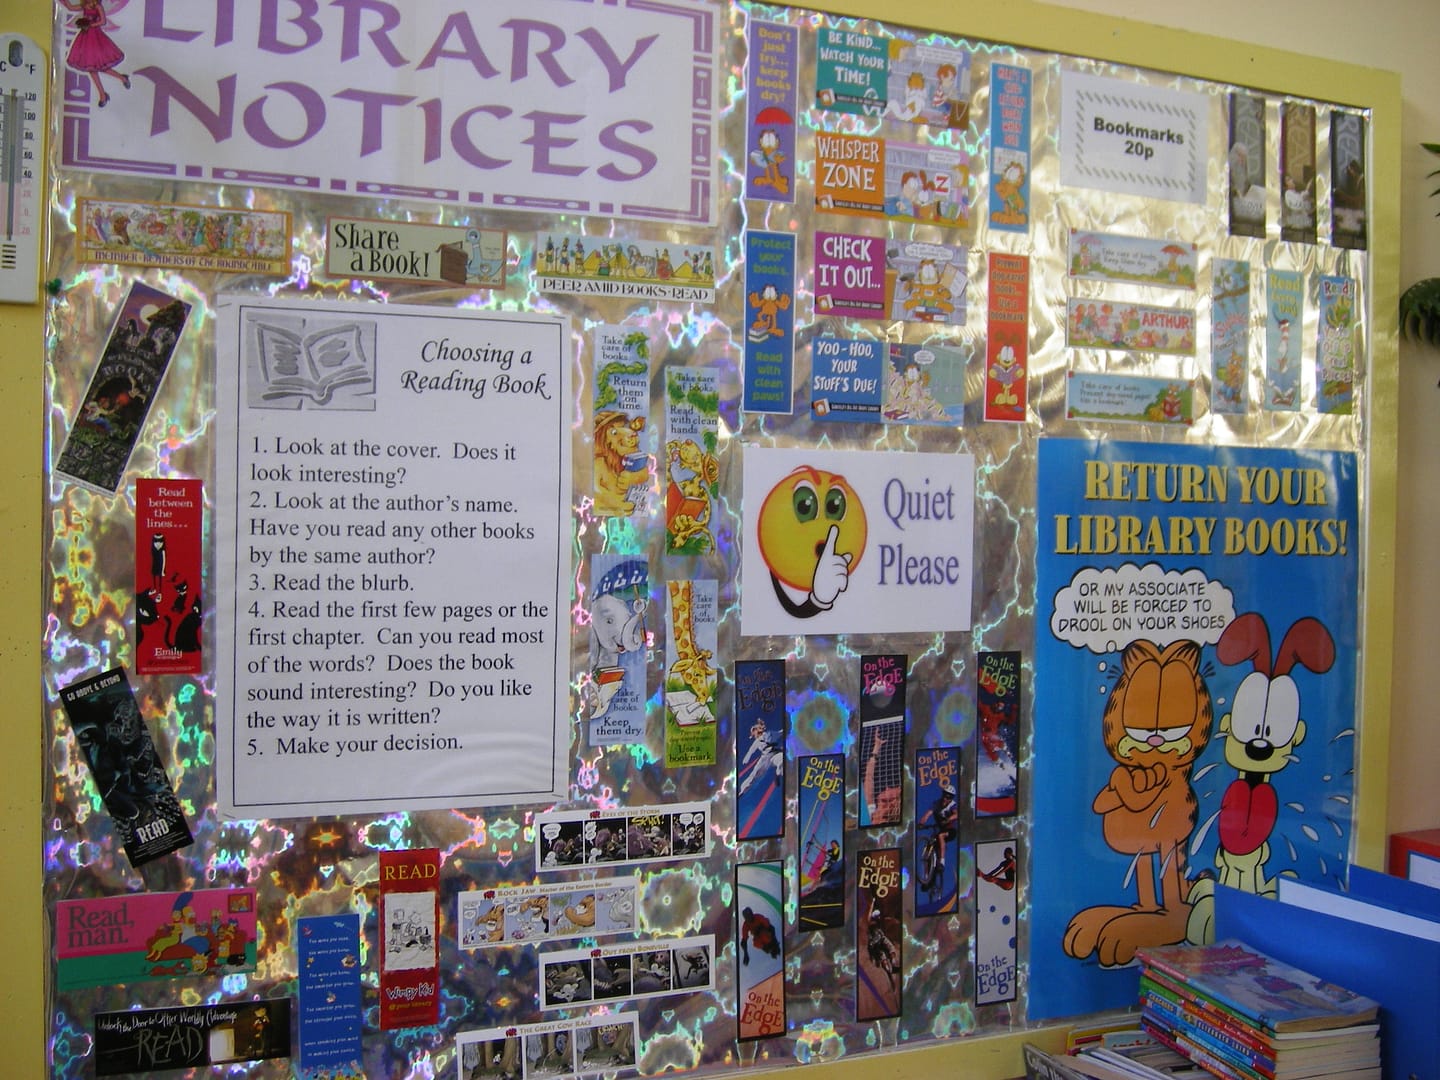 Library Noticeboard